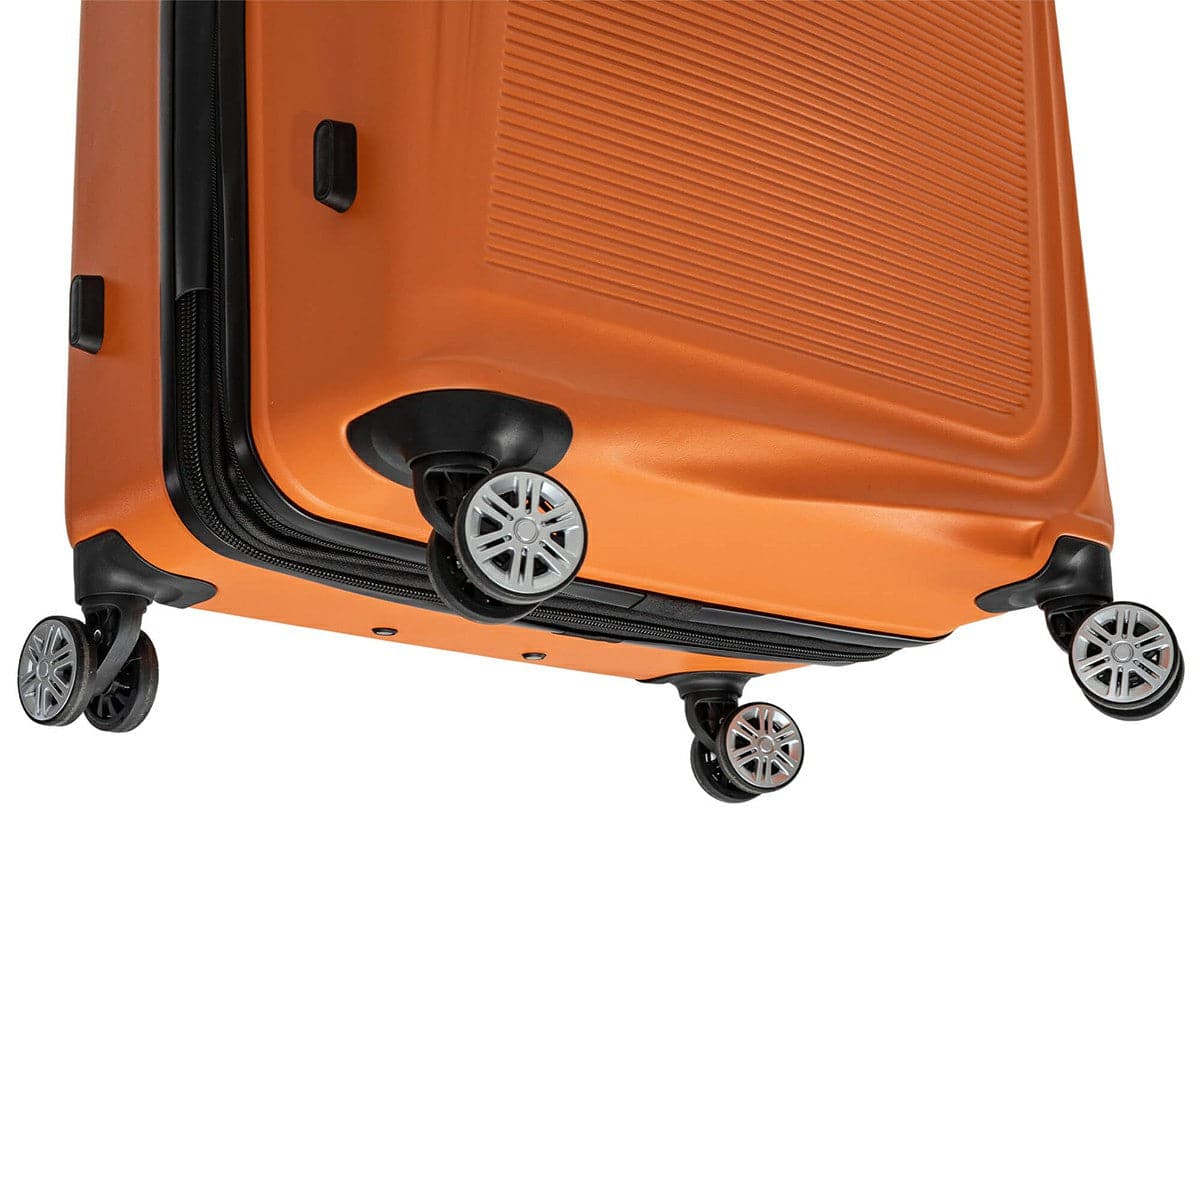 Mancini Sydney Lightweight Spinner Luggage Set